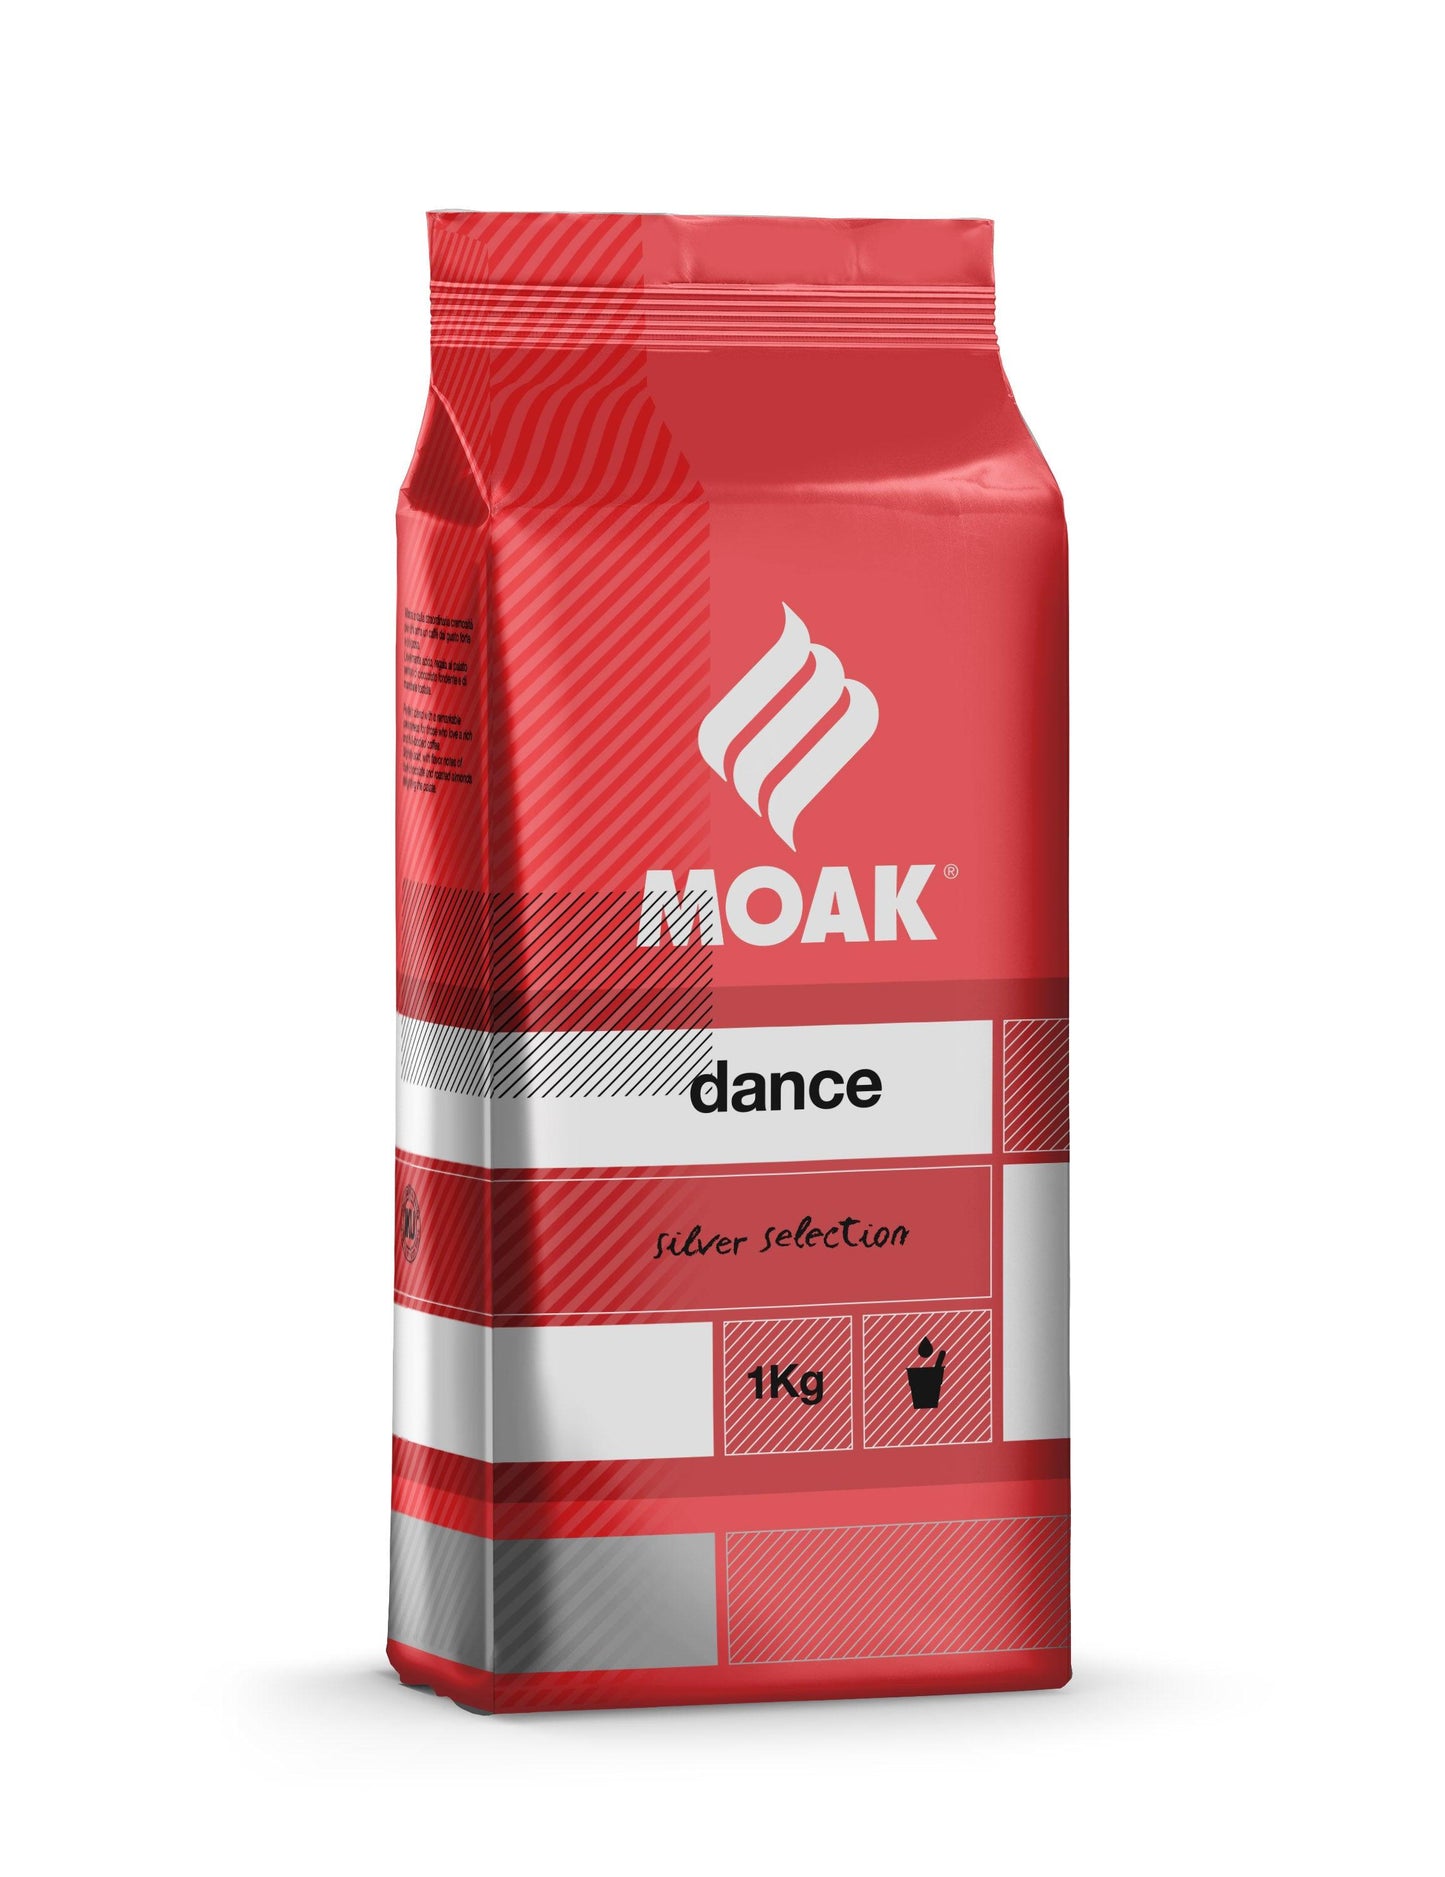 Moak ‘Dance Vending’ Coffee Beans x Kg - Moak International Distributors Malta